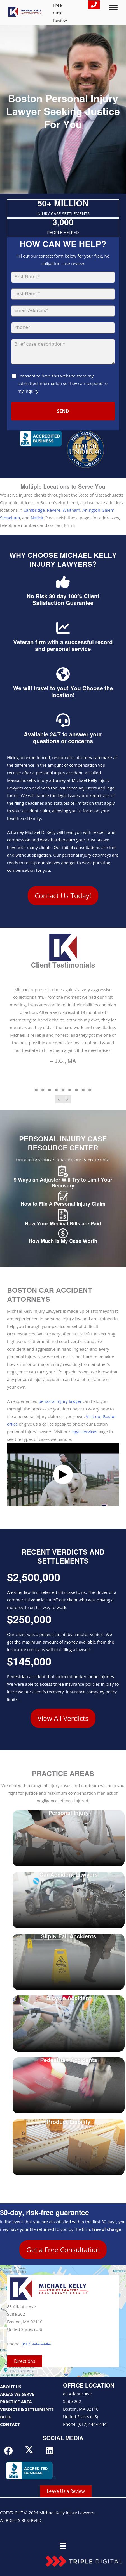 Kelly & Soto Law - Boston MA Lawyers